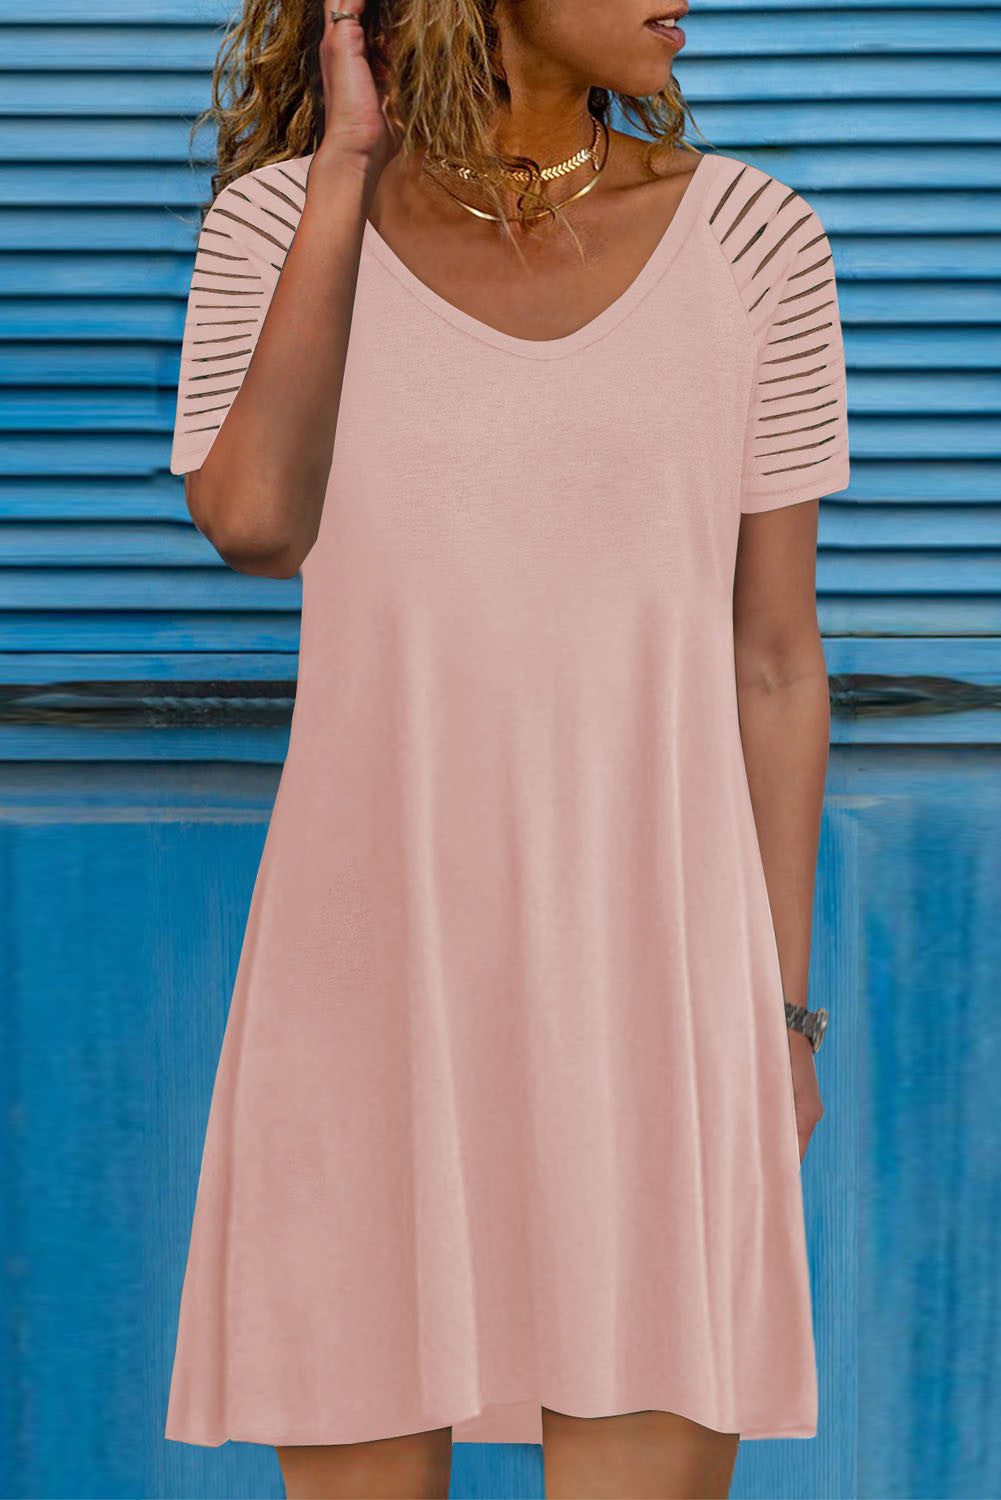 Pink Sheer Striped Short Sleeve Flare T-shirt Mini Dress Item NO.: 1763